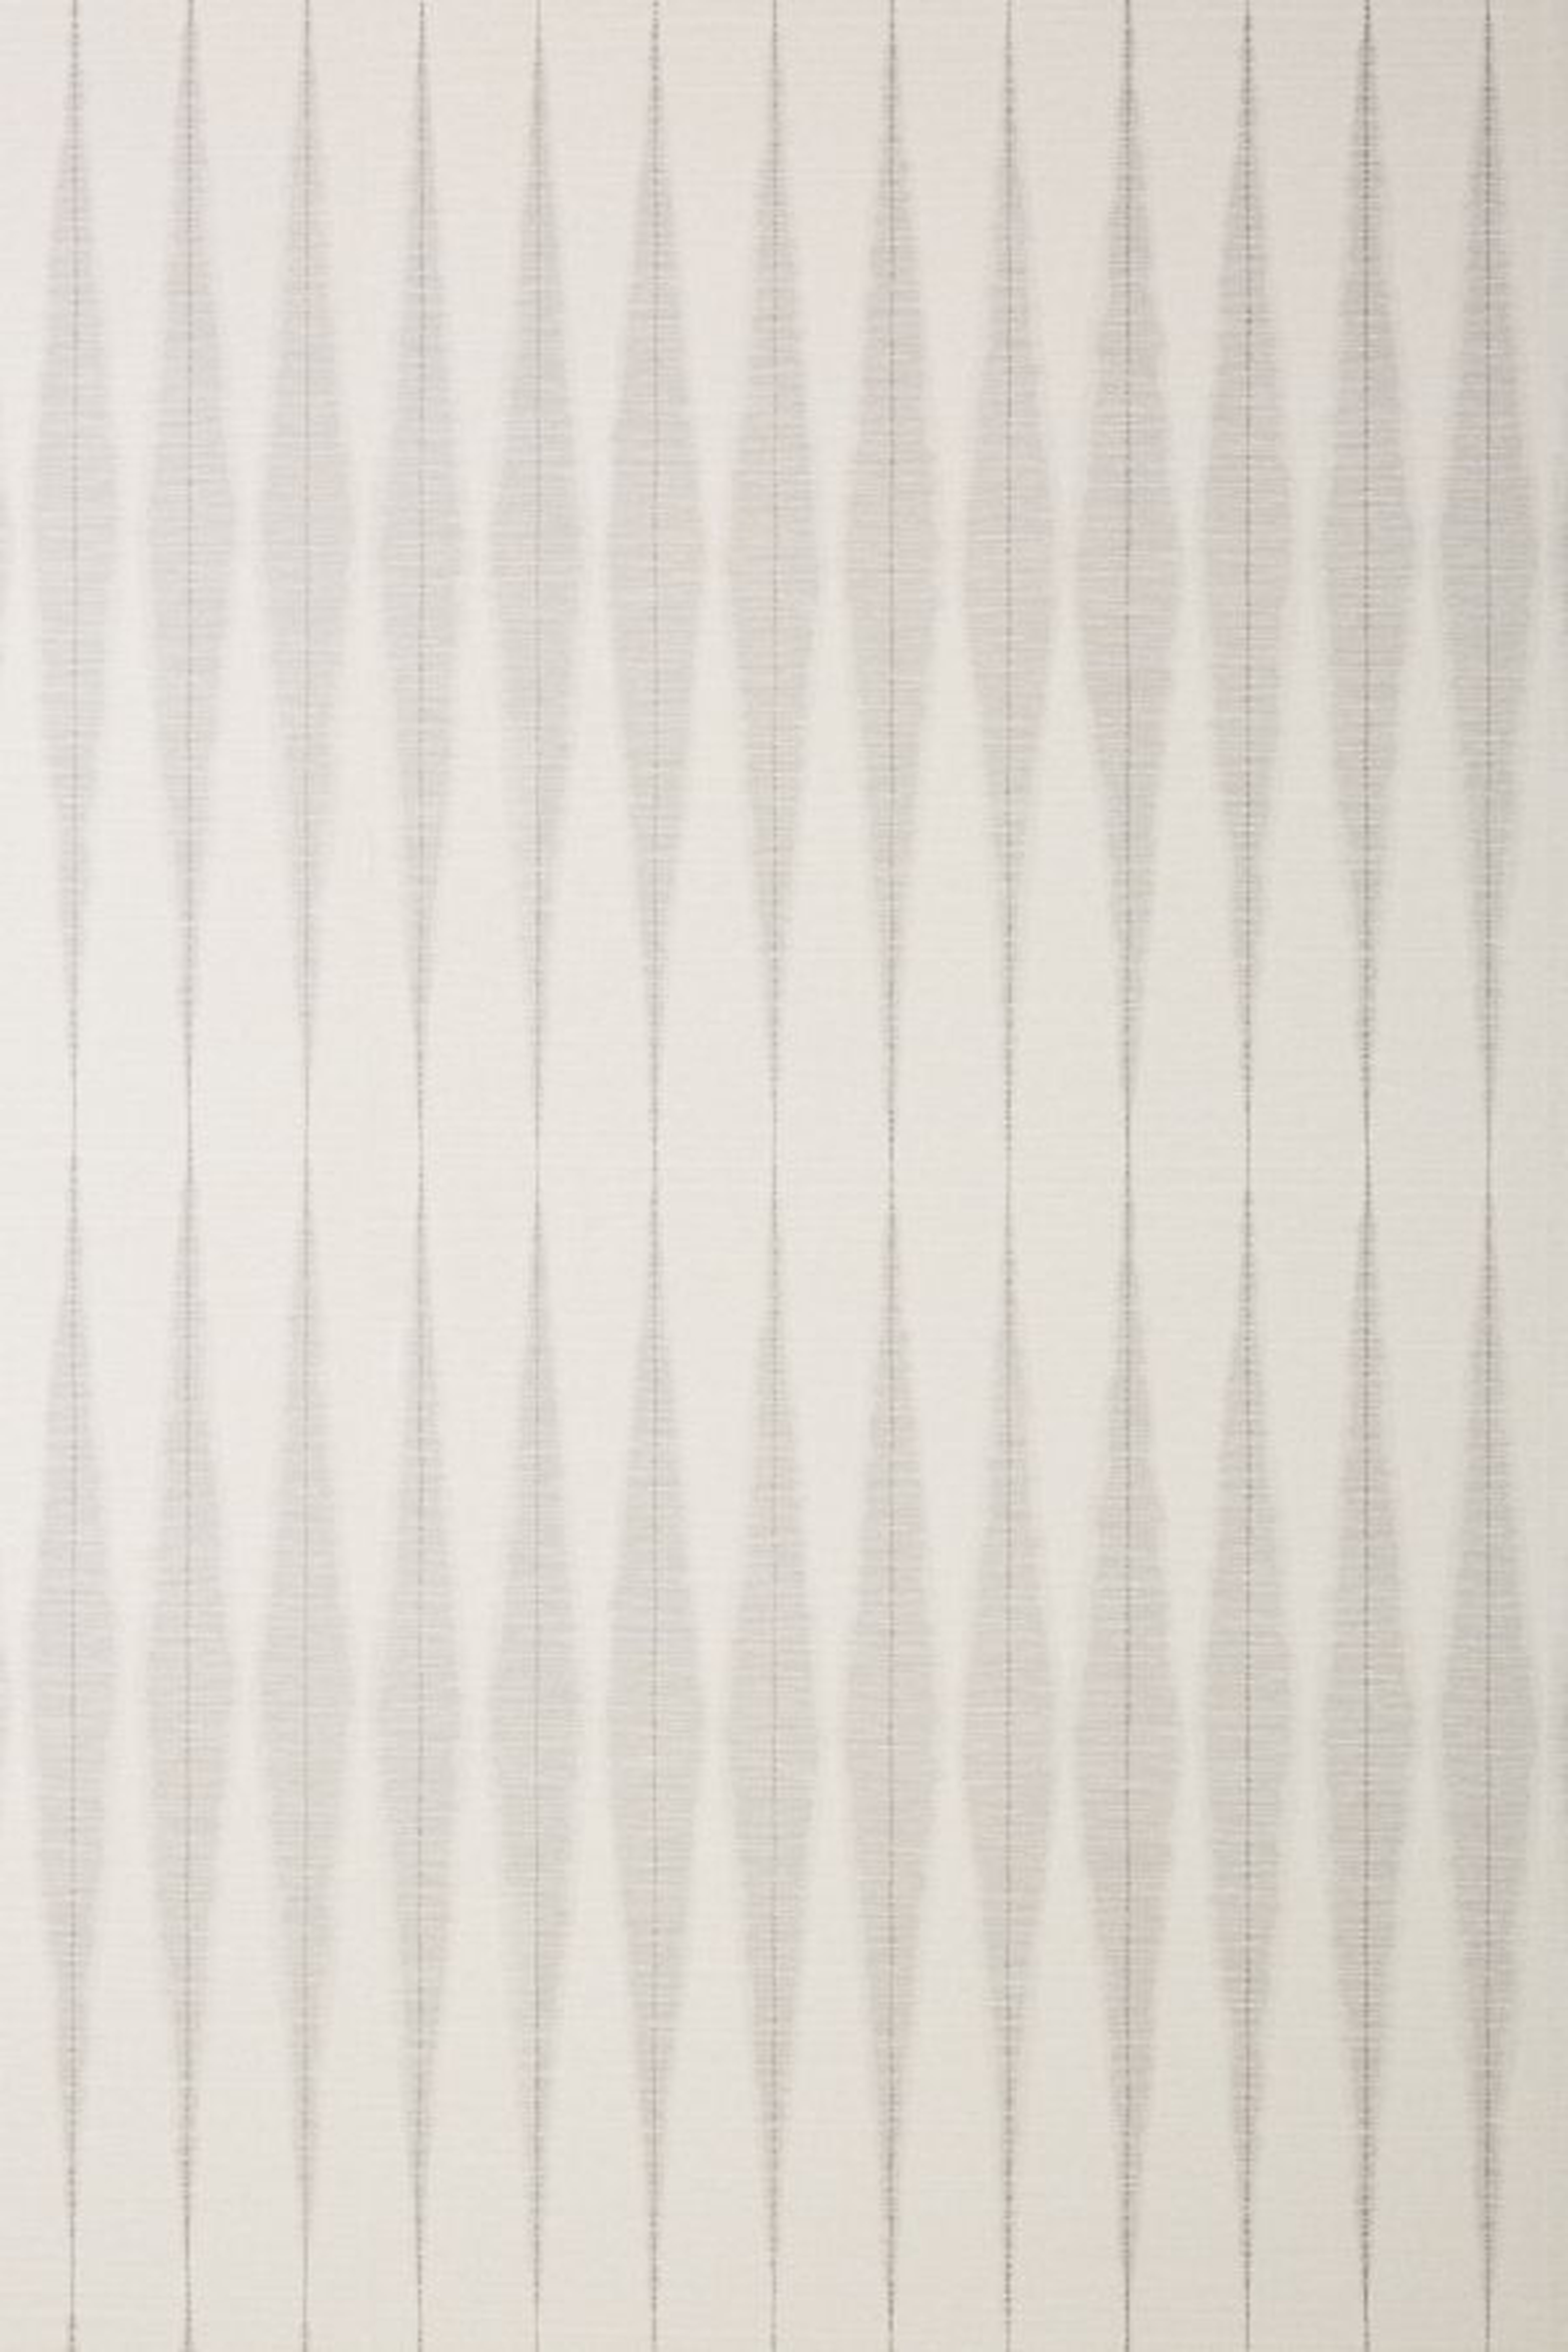 Magnolia Home Handloom Wallpaper - light gray - Anthropologie